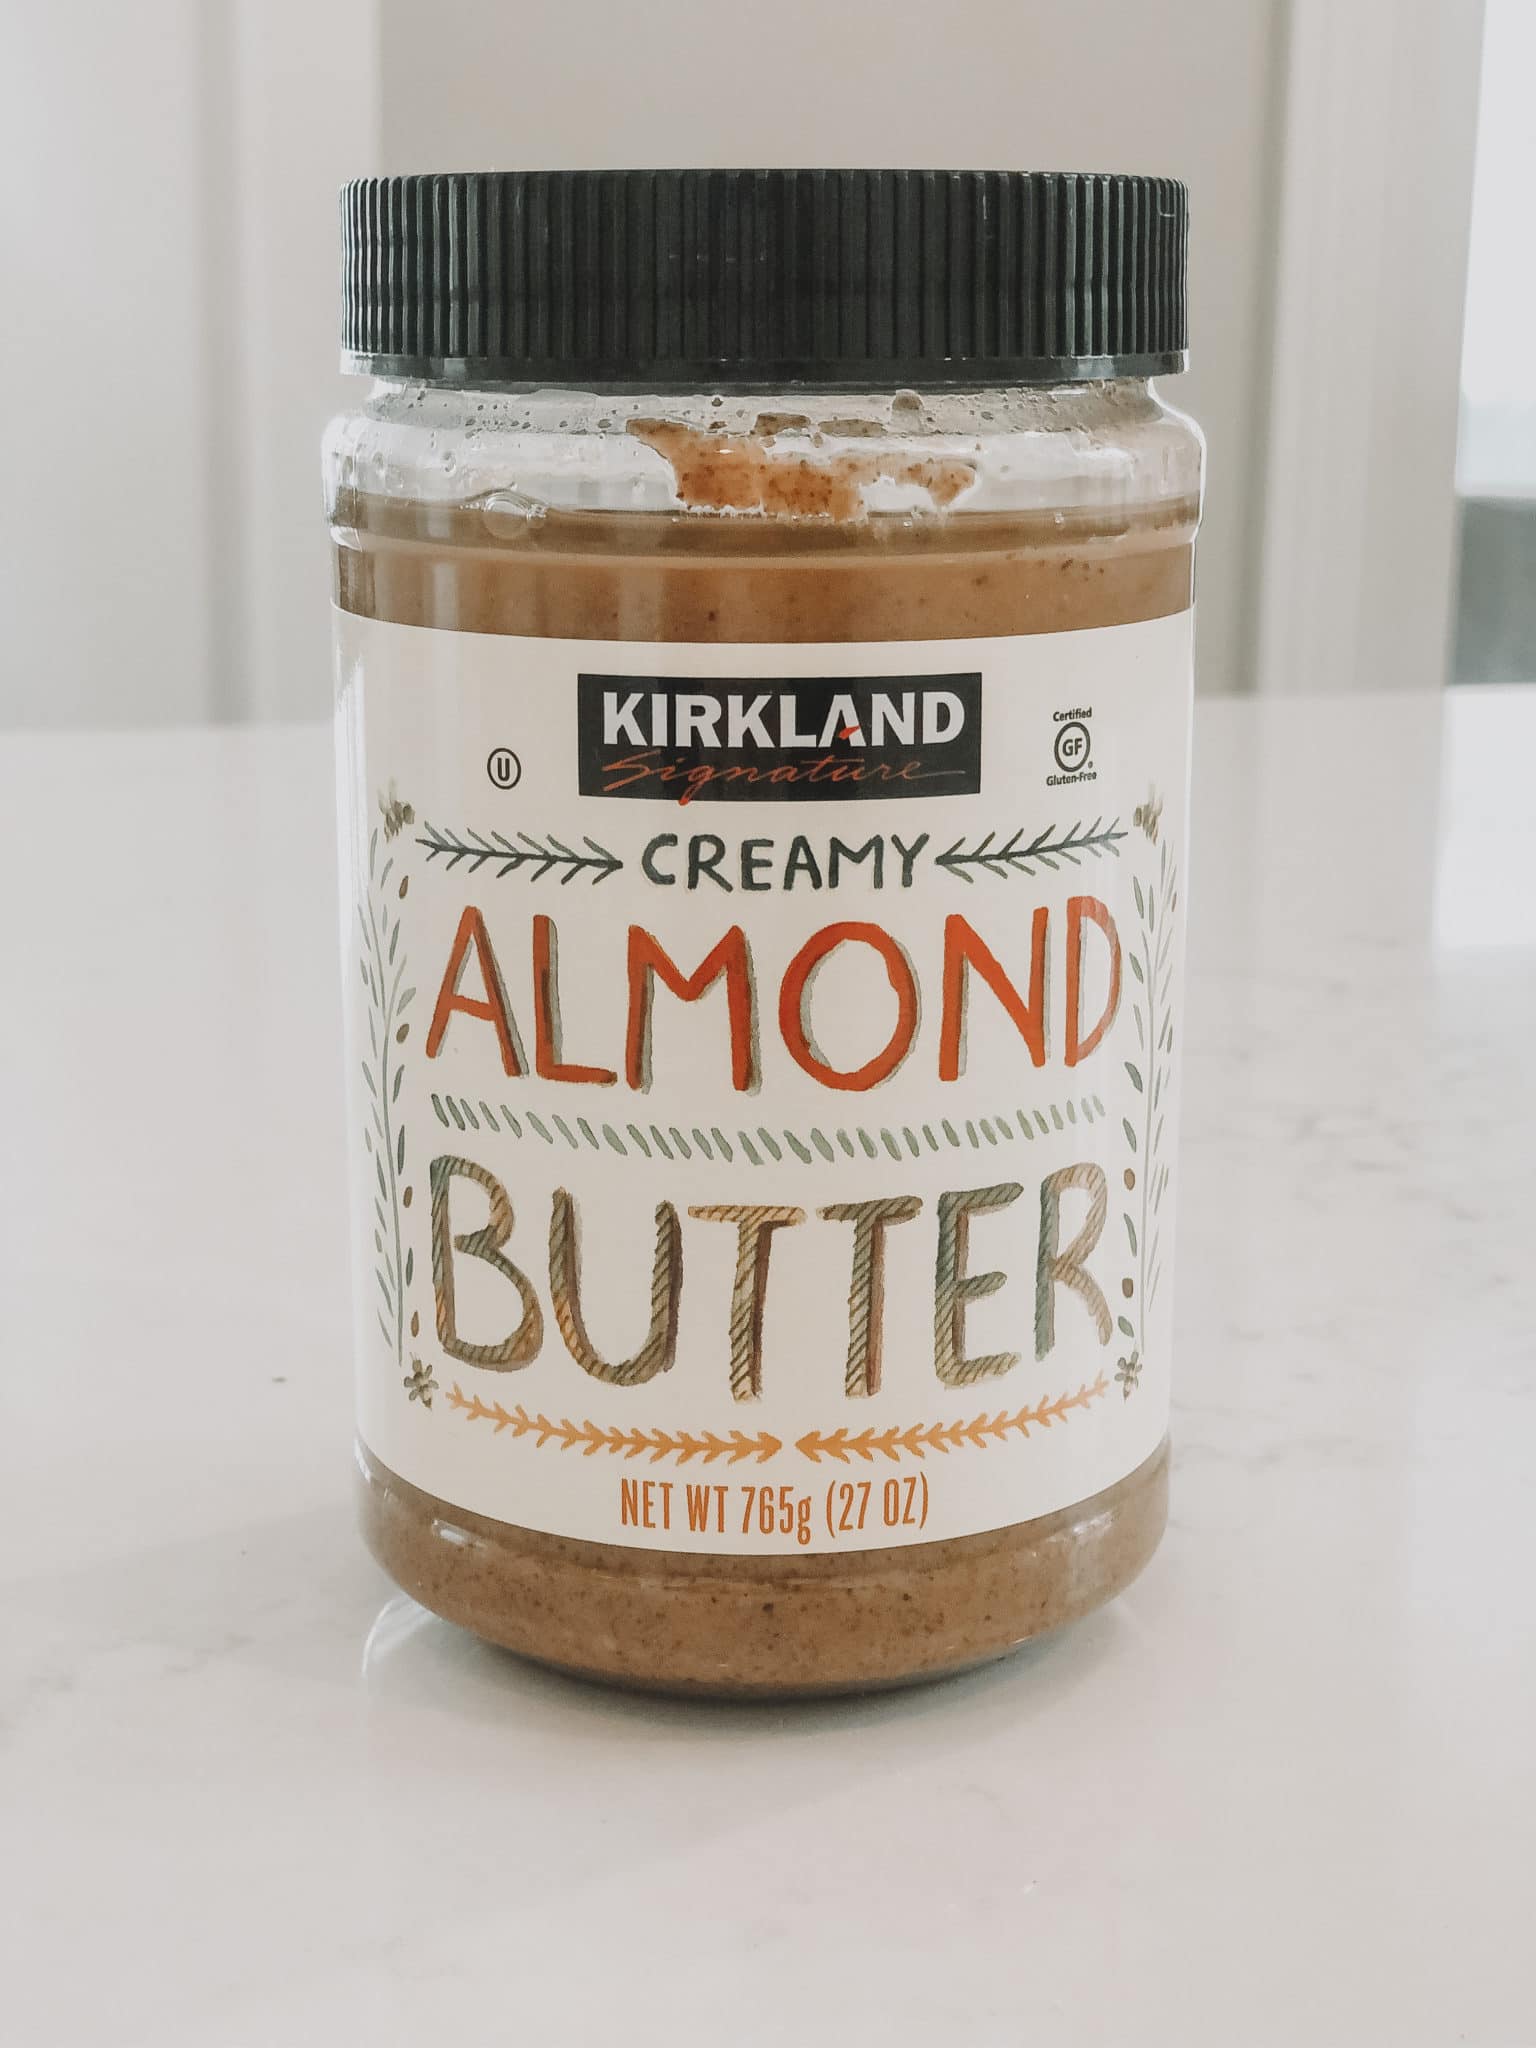 Kirkland Almond Butter from Costco